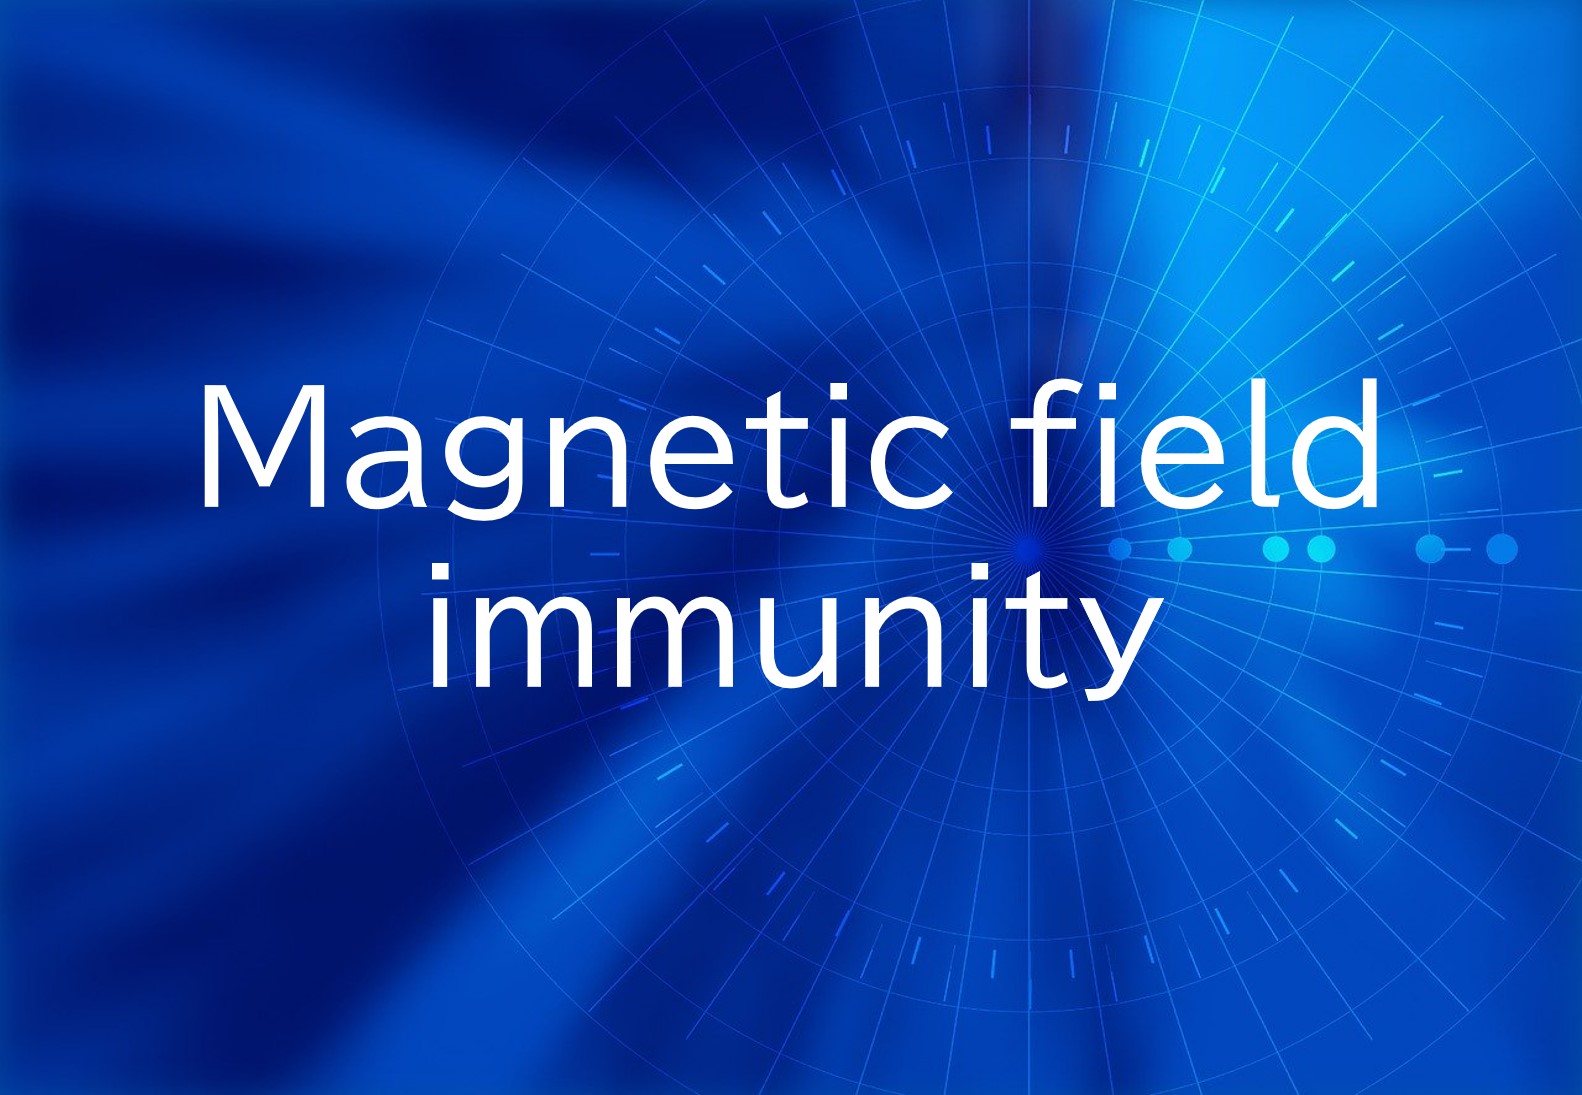 Magnetic field immunity